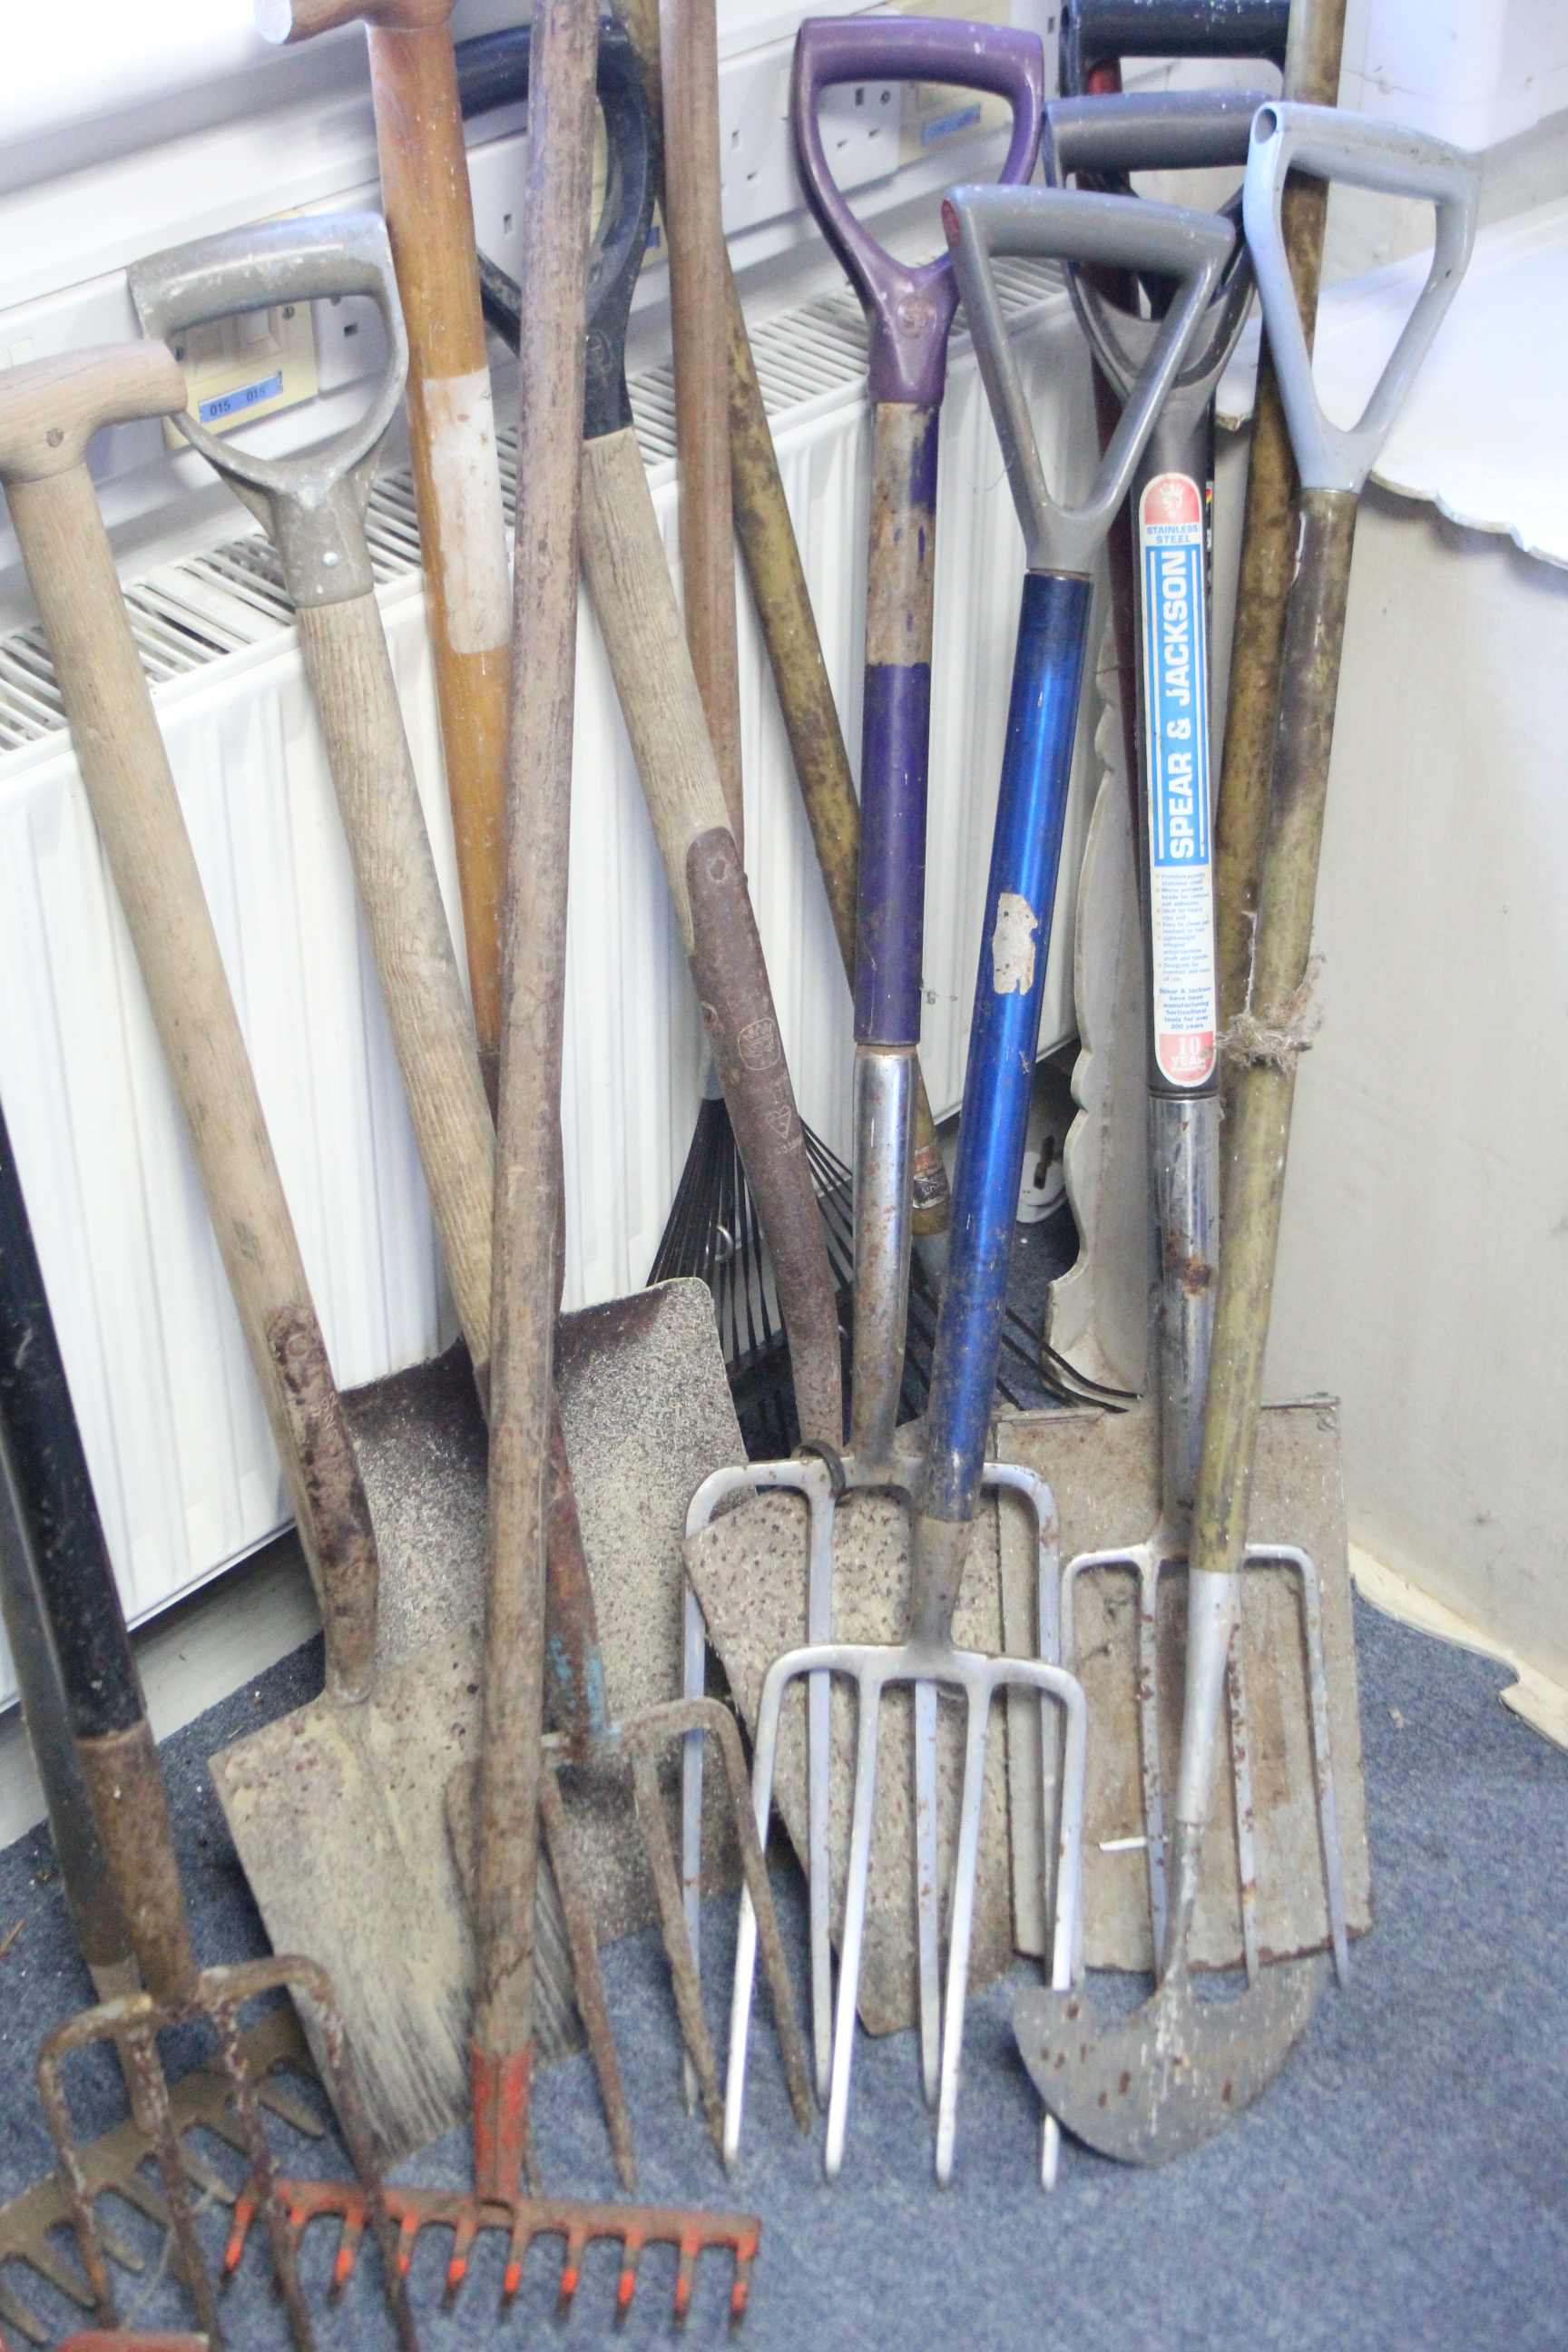 A Beldray aluminium folding step ladder; and various garden tools.